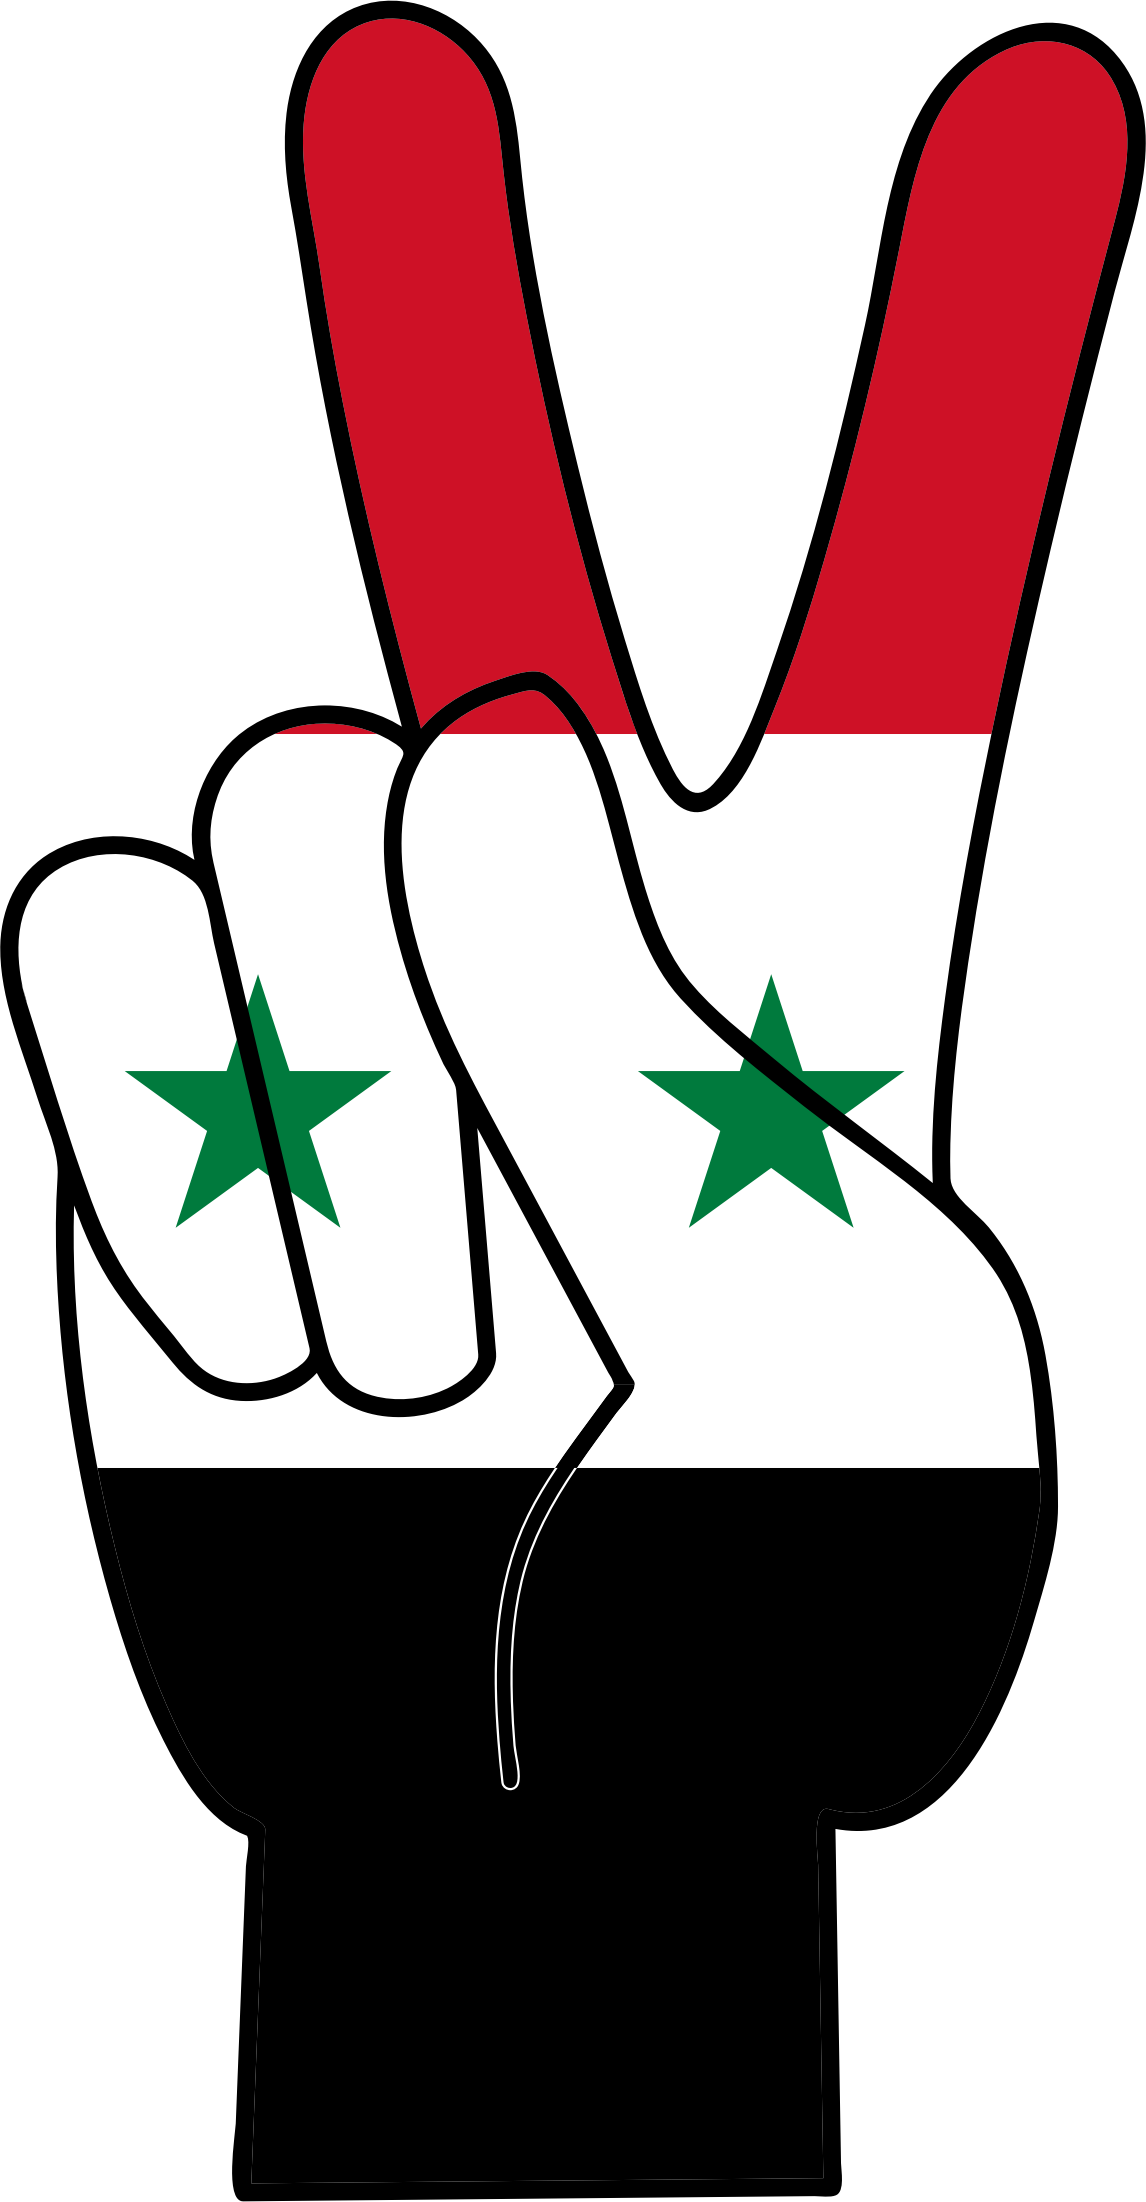 Peace Syria - Civil War Symbols (1146x2202)